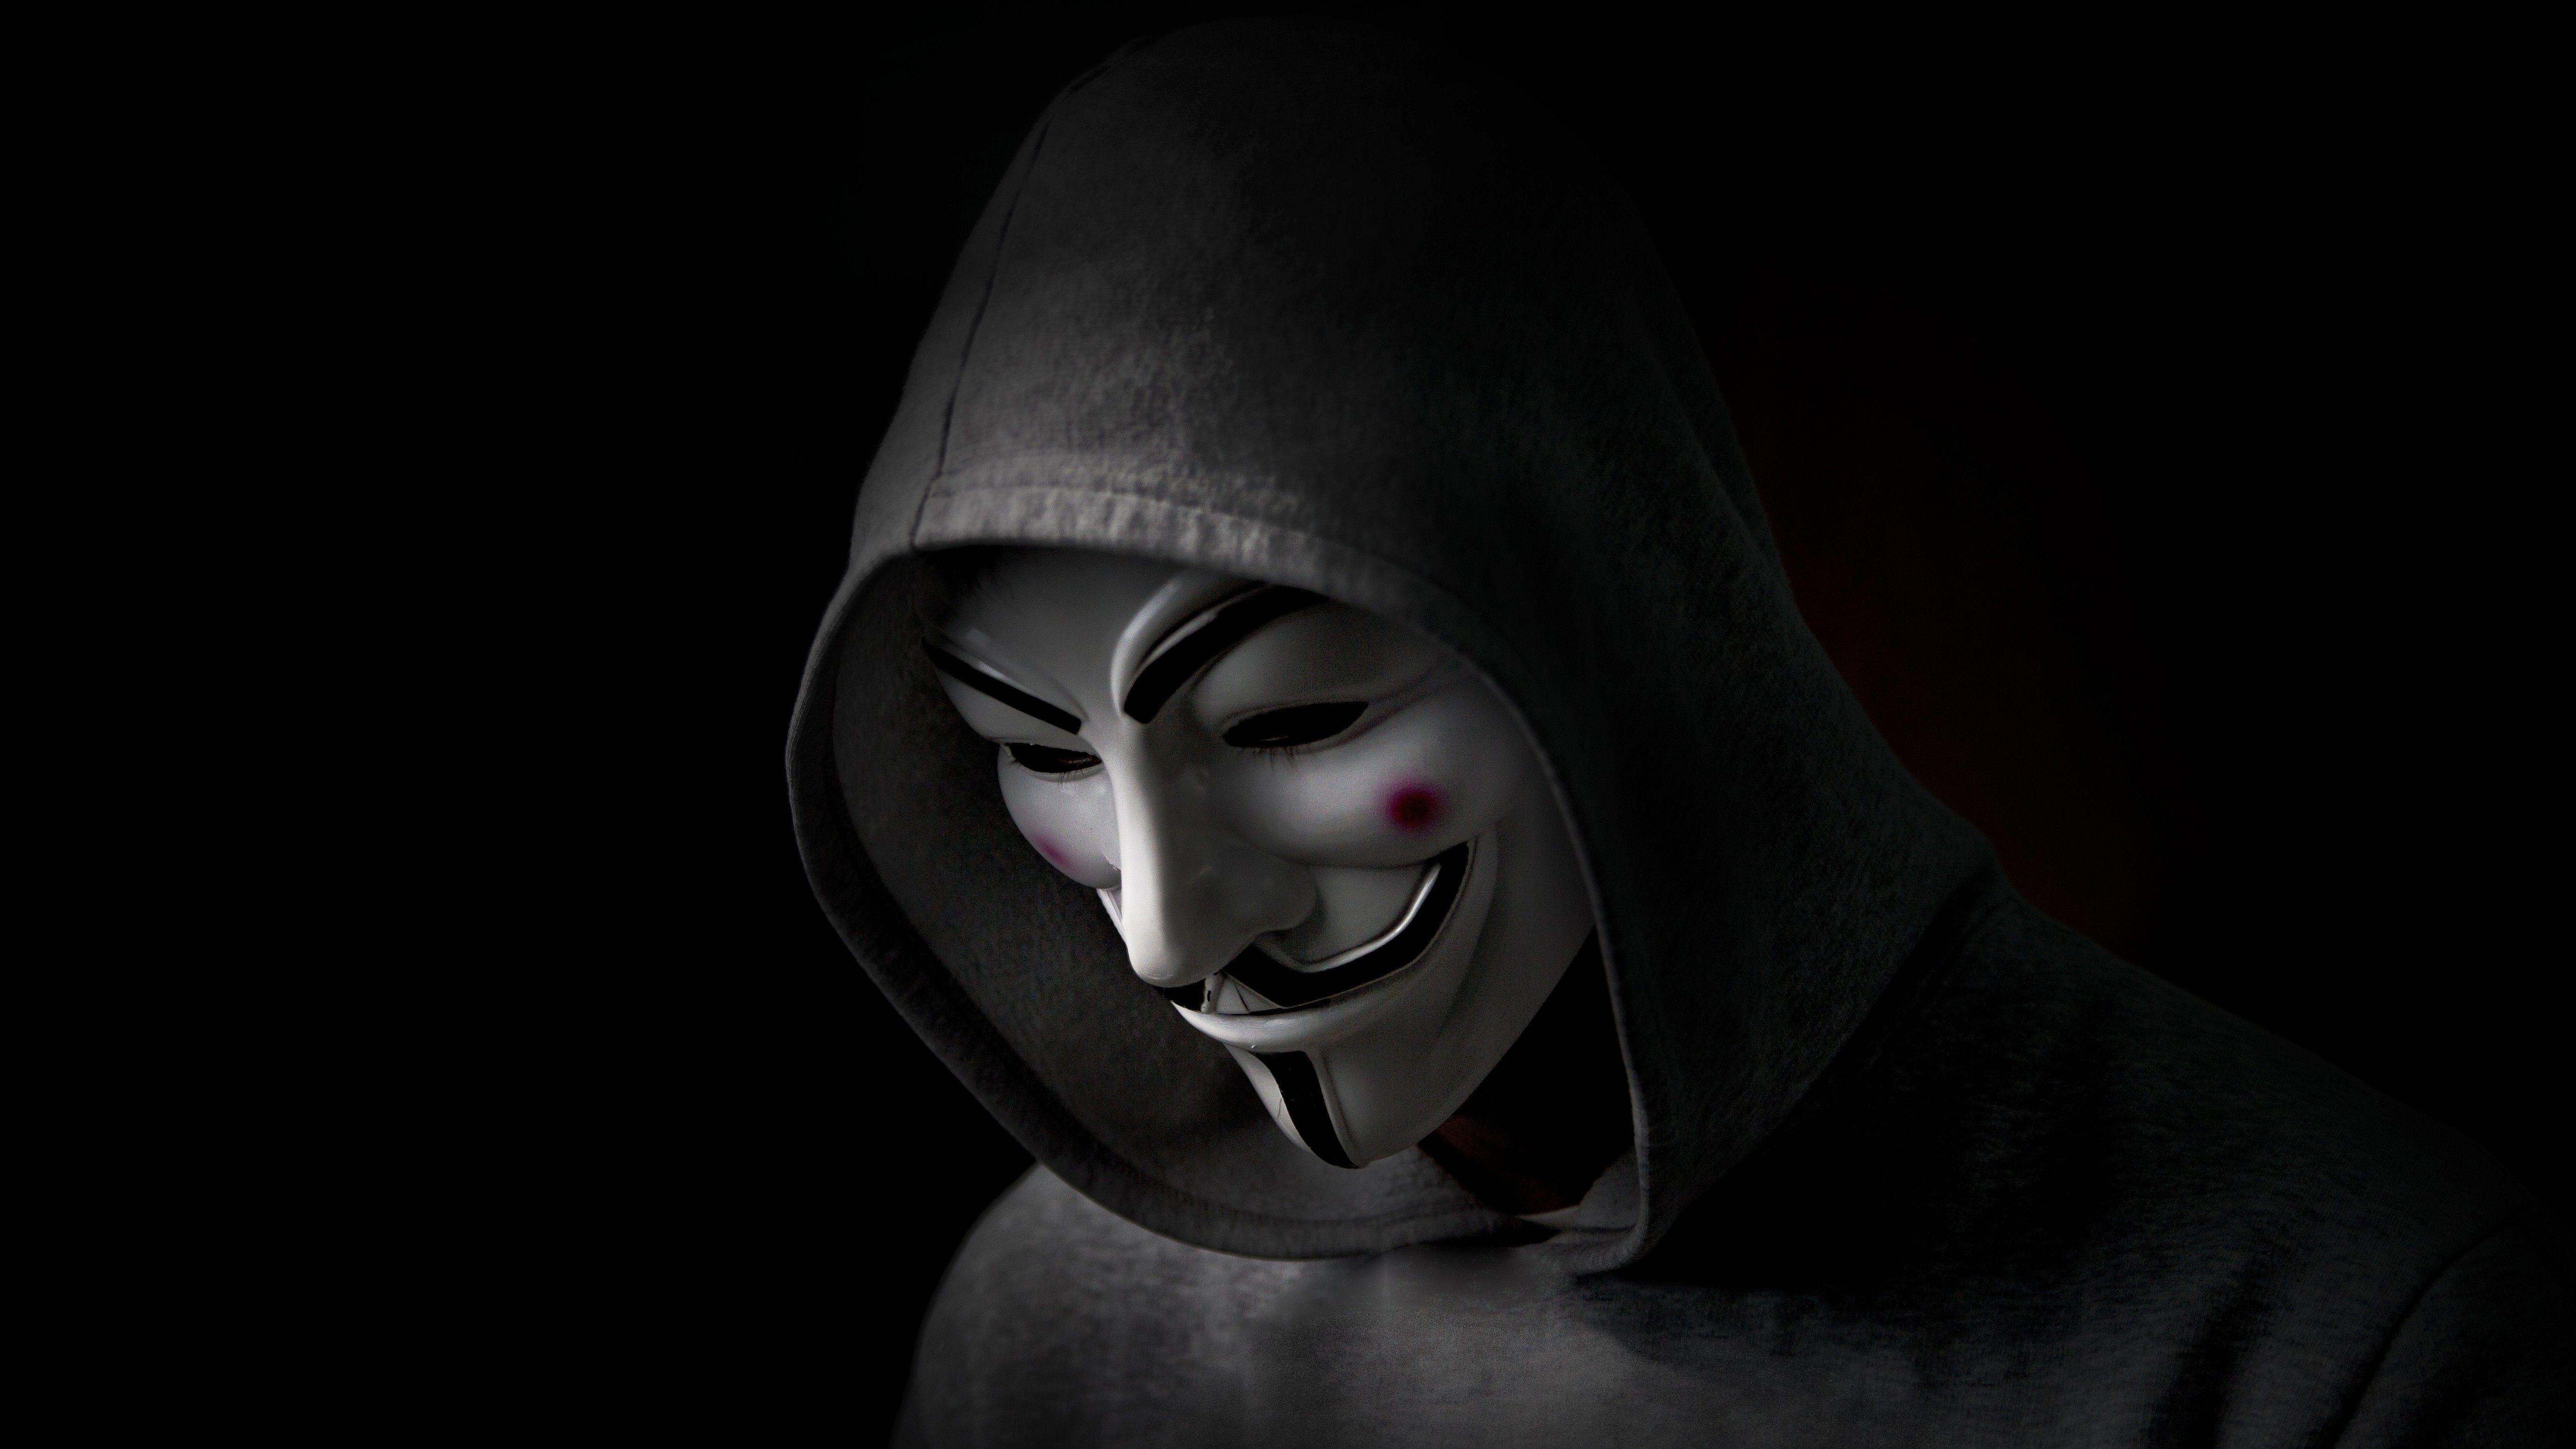 Anonymus Hacker In Hoodie, HD Computer, 4k Wallpaper, Image